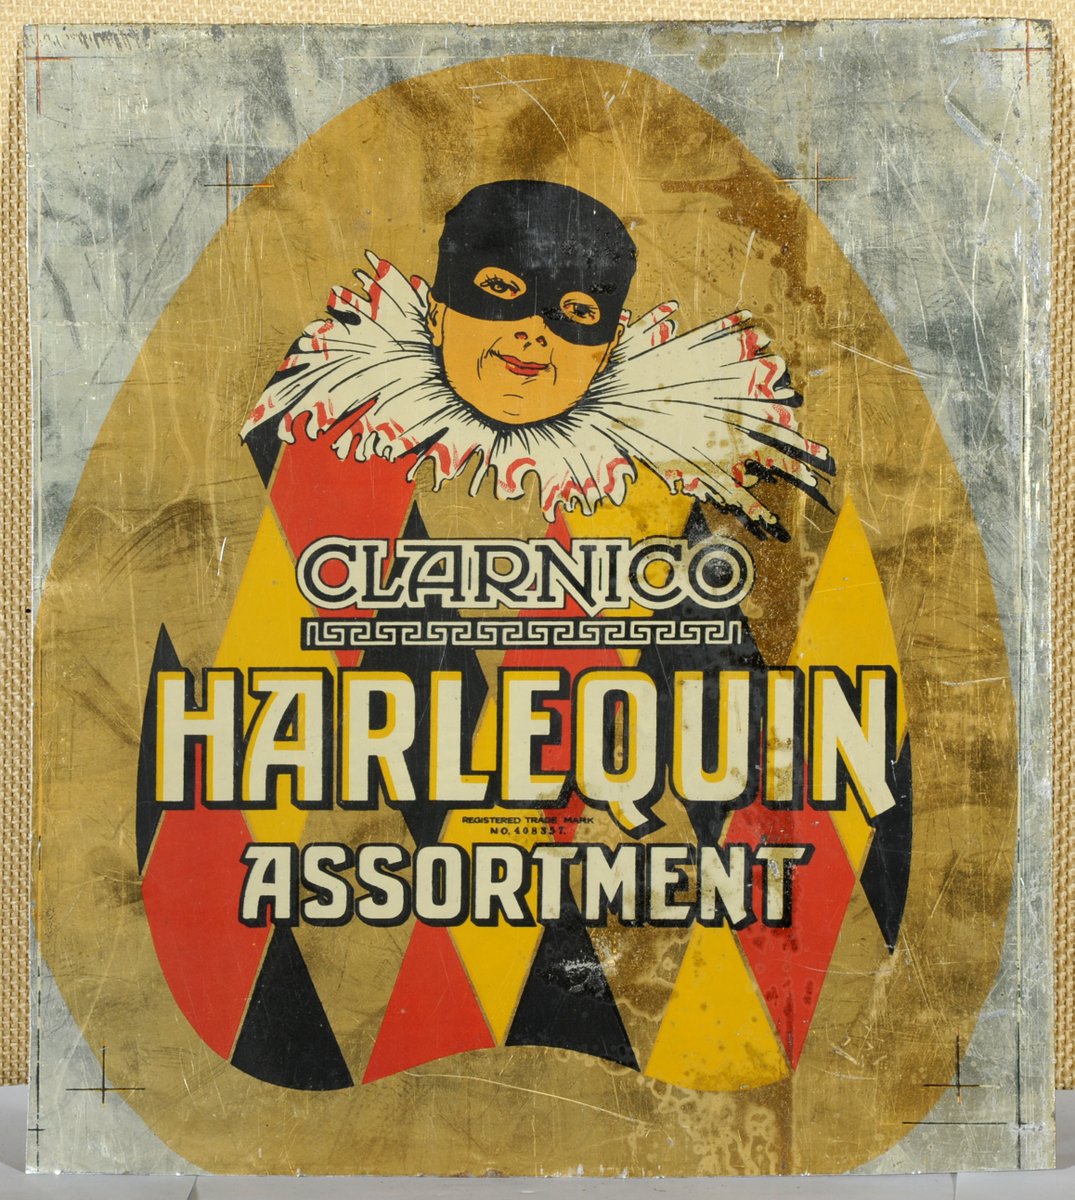 Clarnico Harlequin Assortment sign